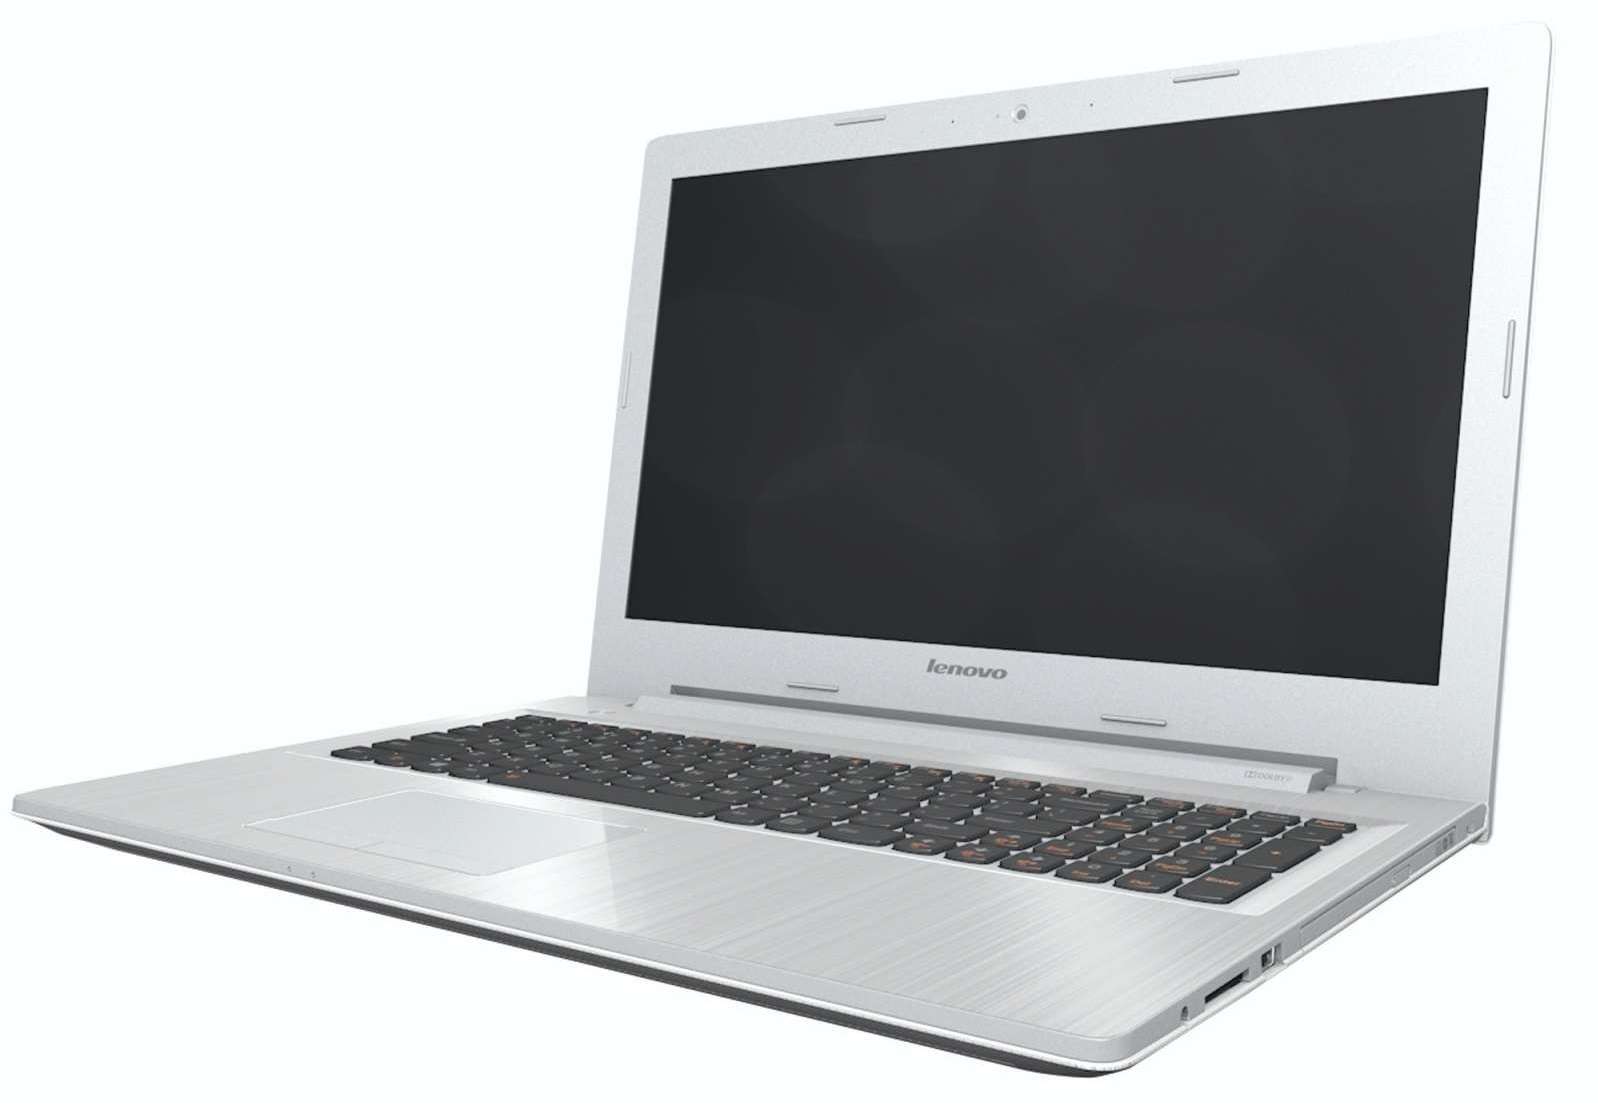 Laptop Lenovo Z5070-59439197 (5943-9197) - Intel core i3-4030U, 4GB RAM, HDD 500GB, Nvidia GeForce 820M, 15.6 inch